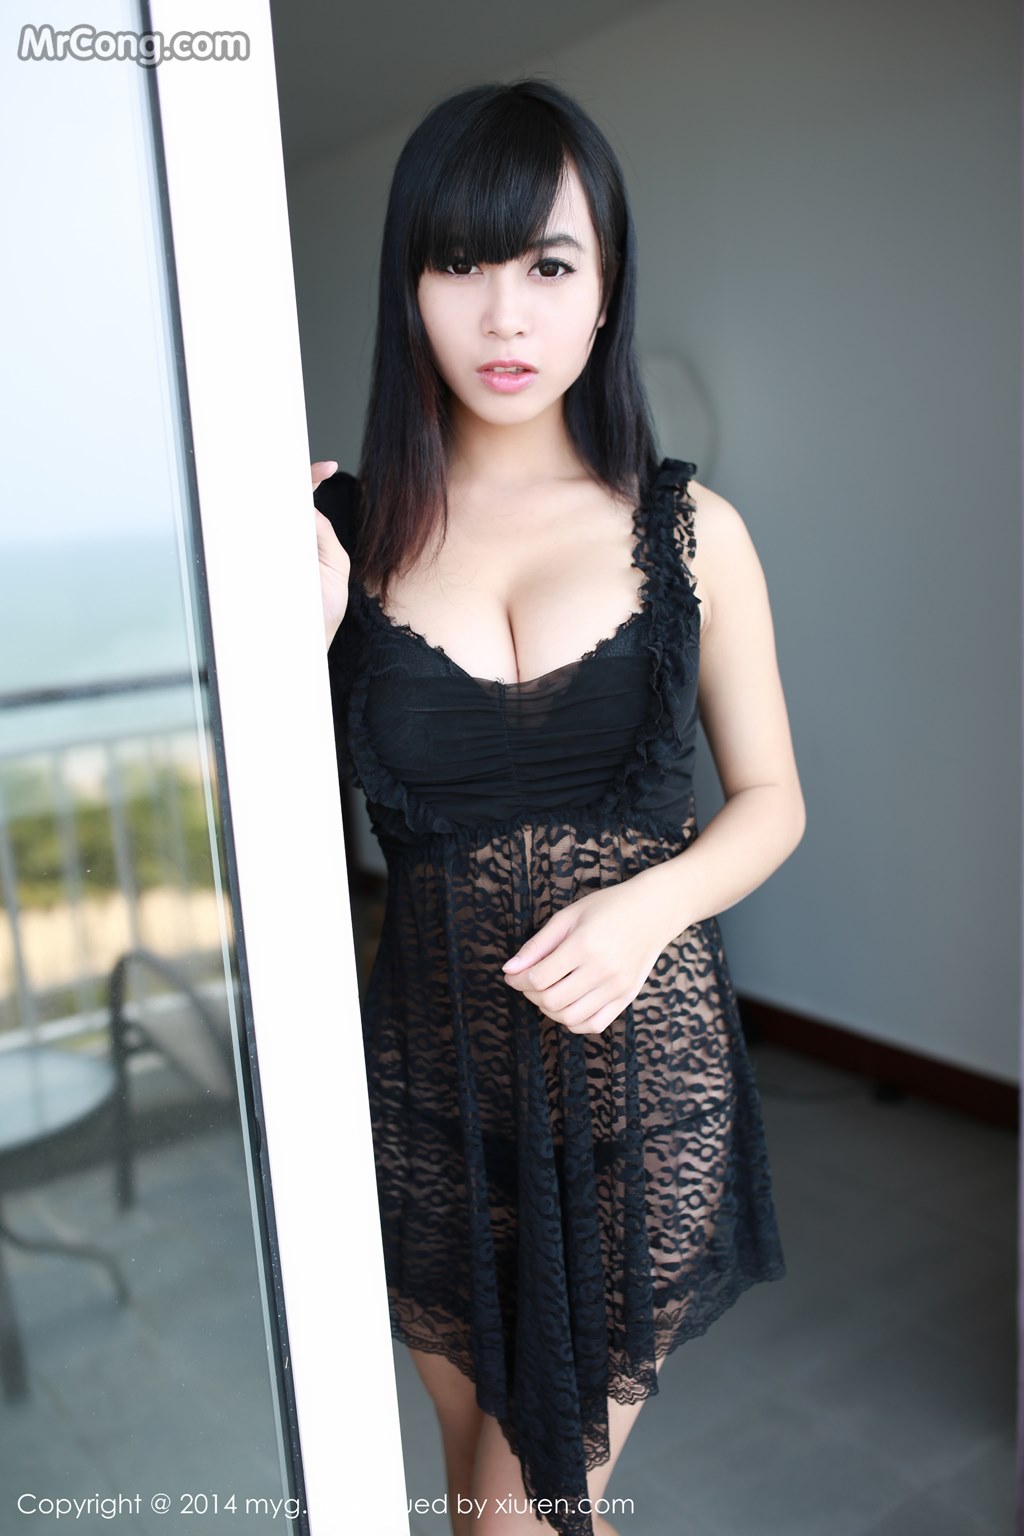 MyGirl Vol.033: Model Christine (黄 可) (70 photos) photo 1-14